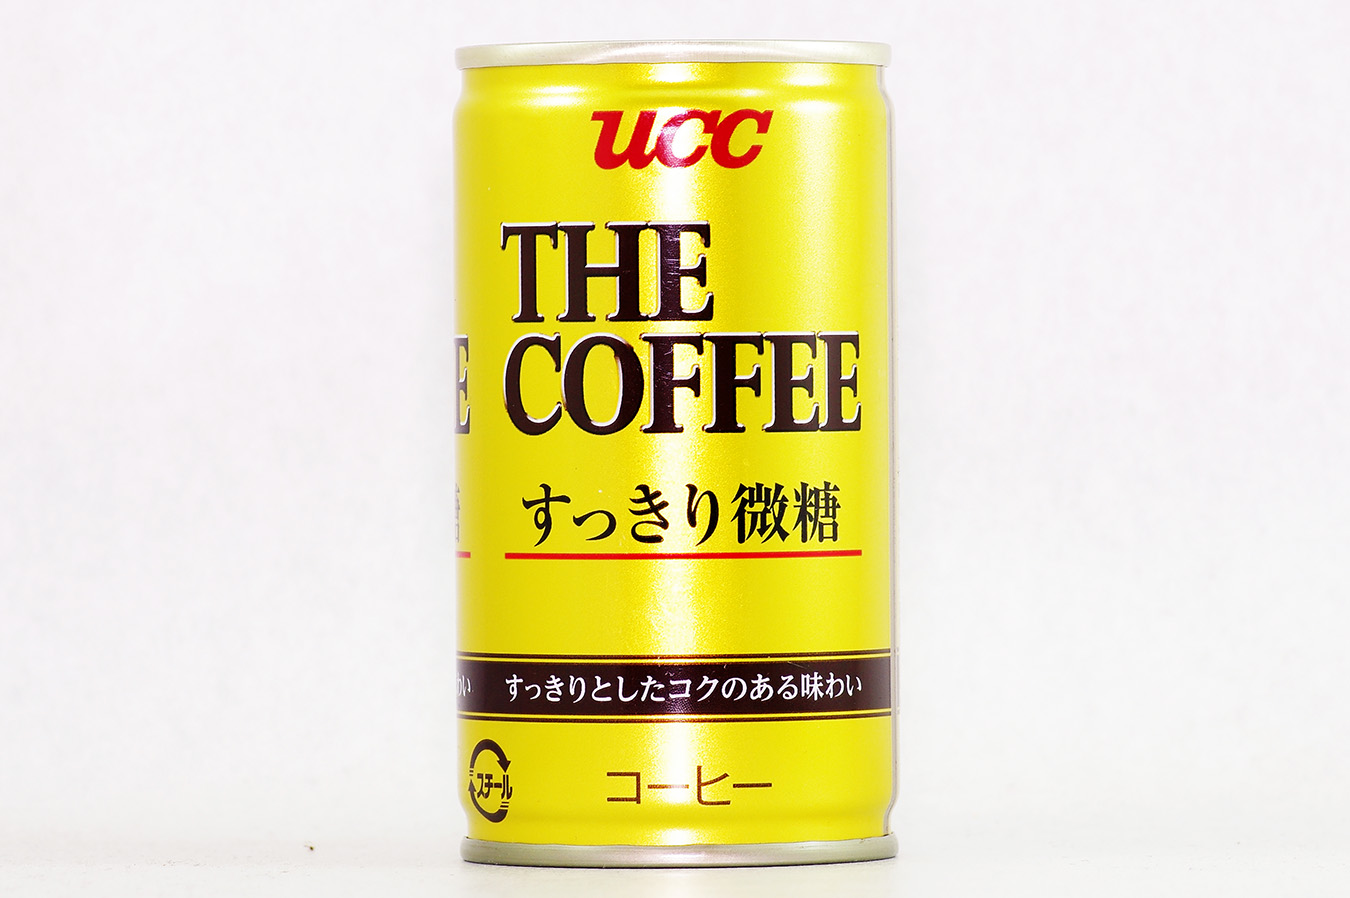 UCC THE COFFEE すっきり微糖 2016年6月